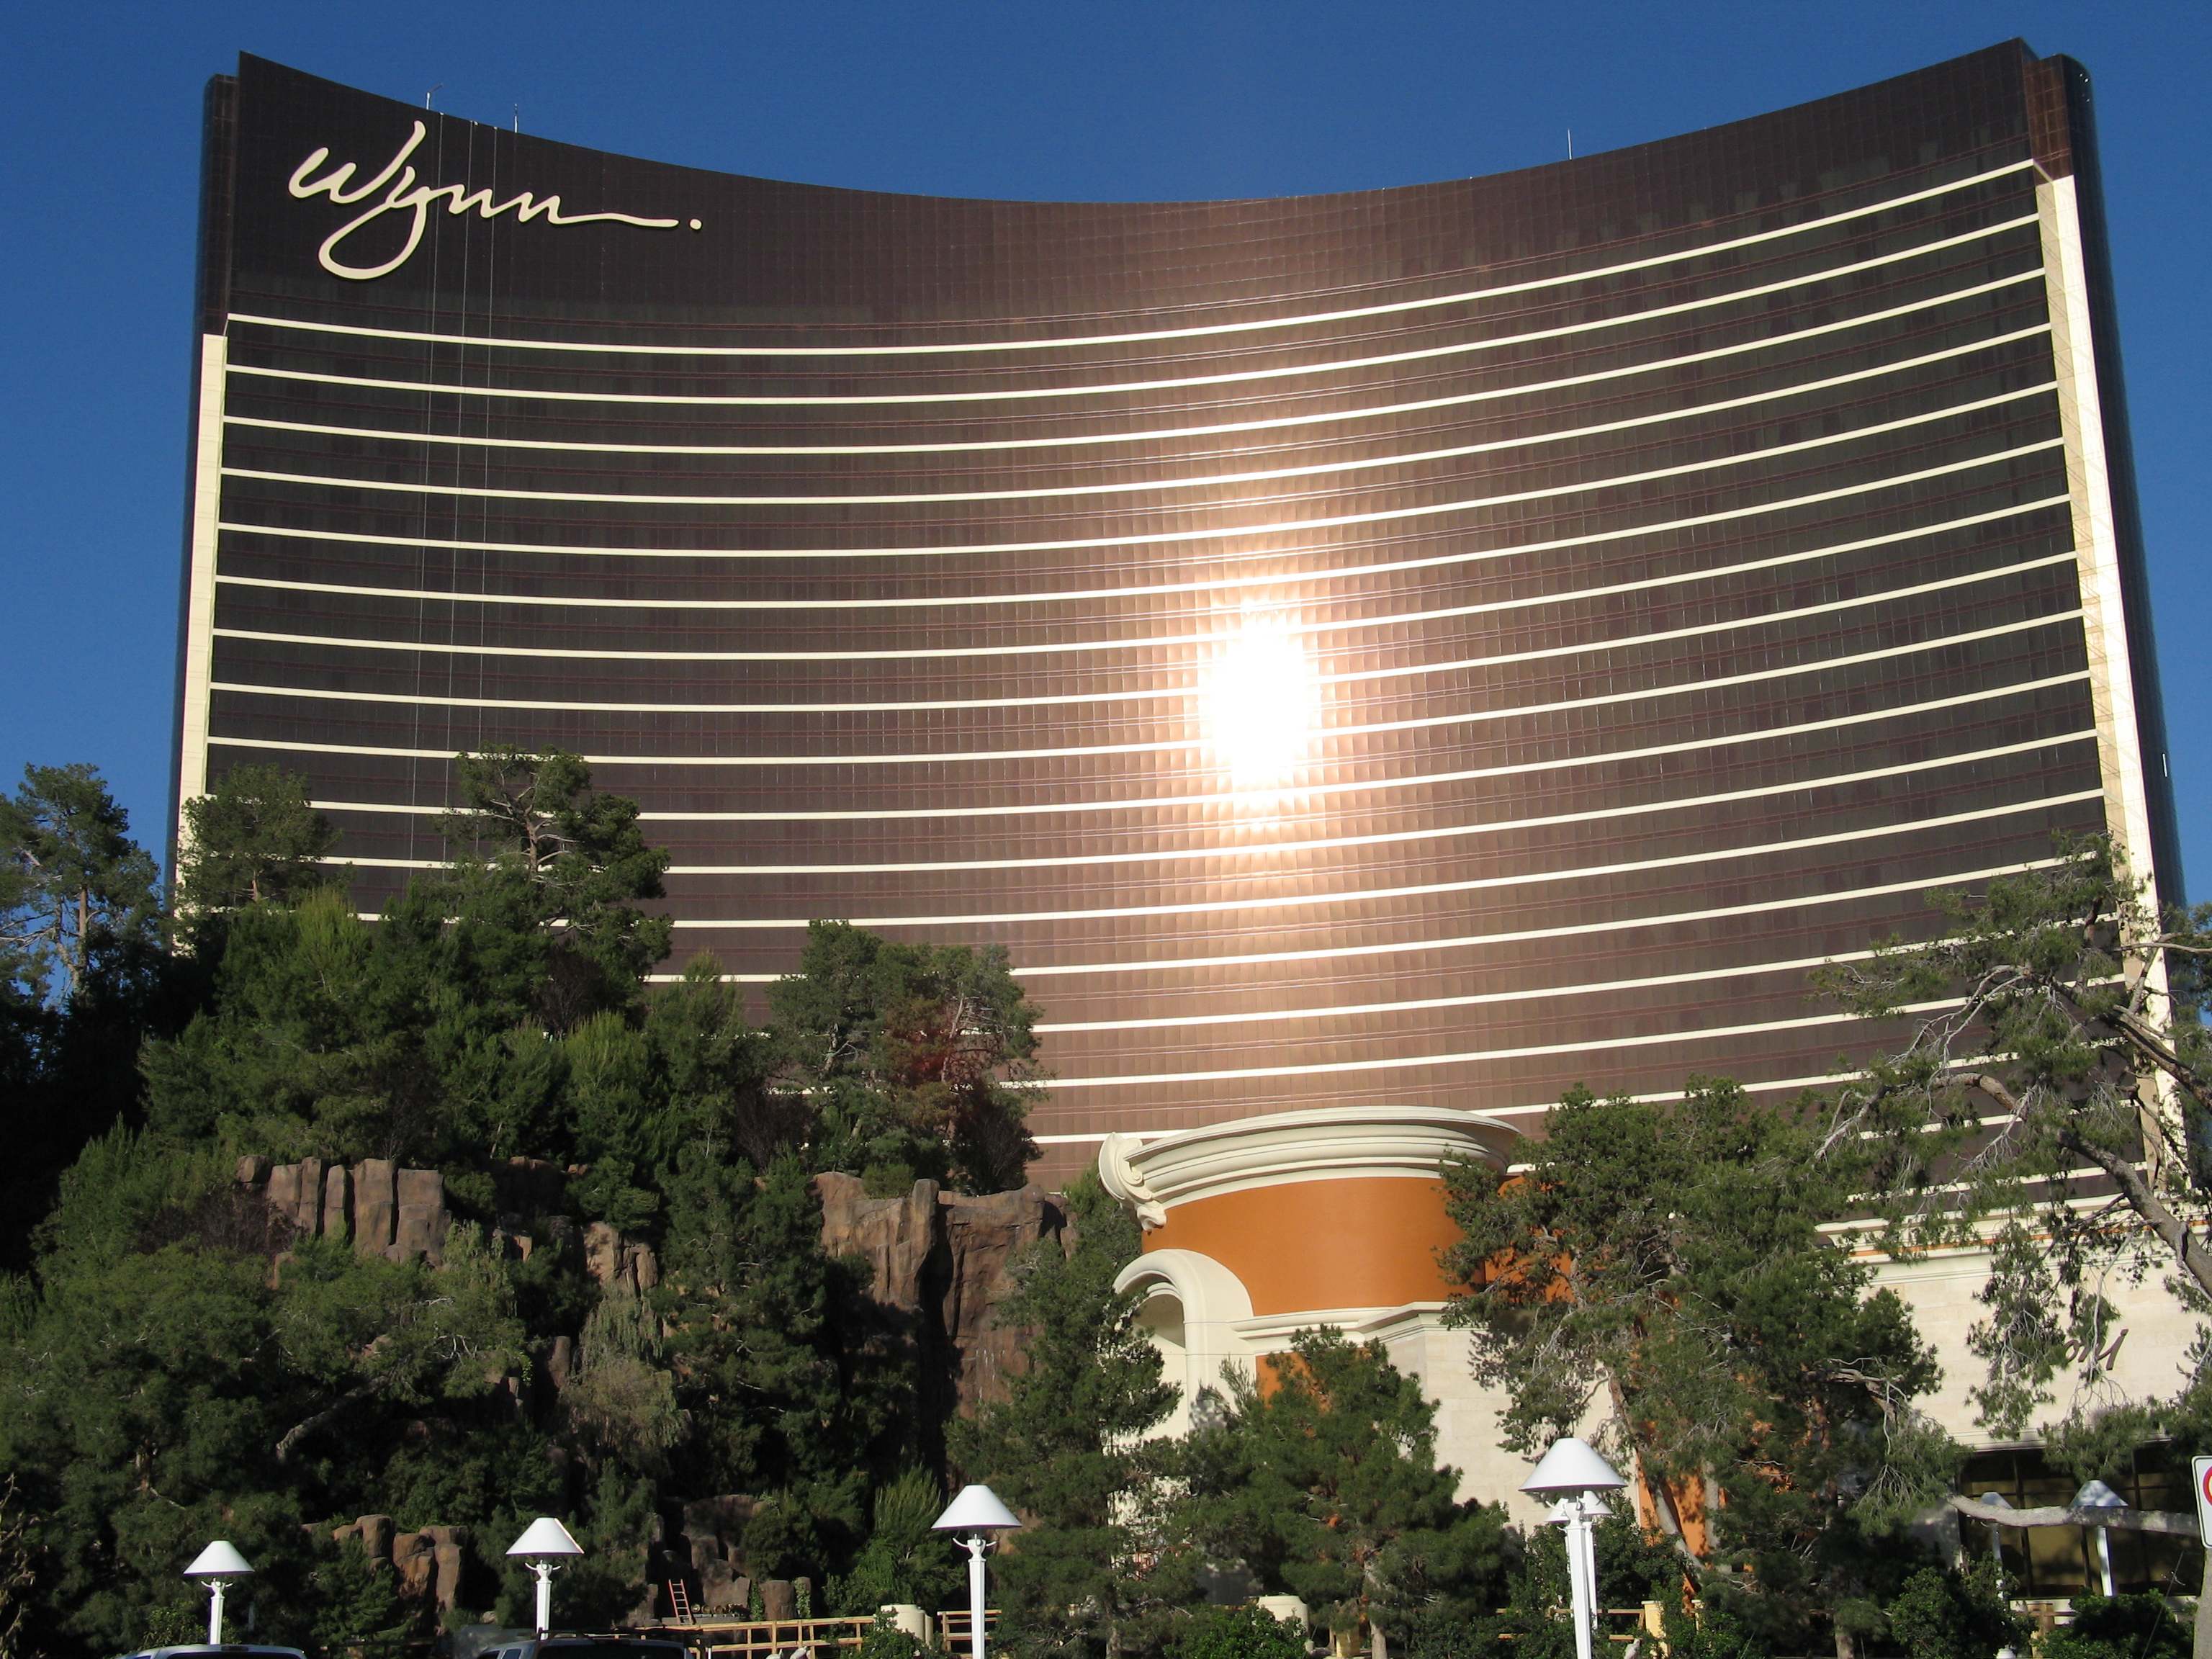 The Wynn Vegas